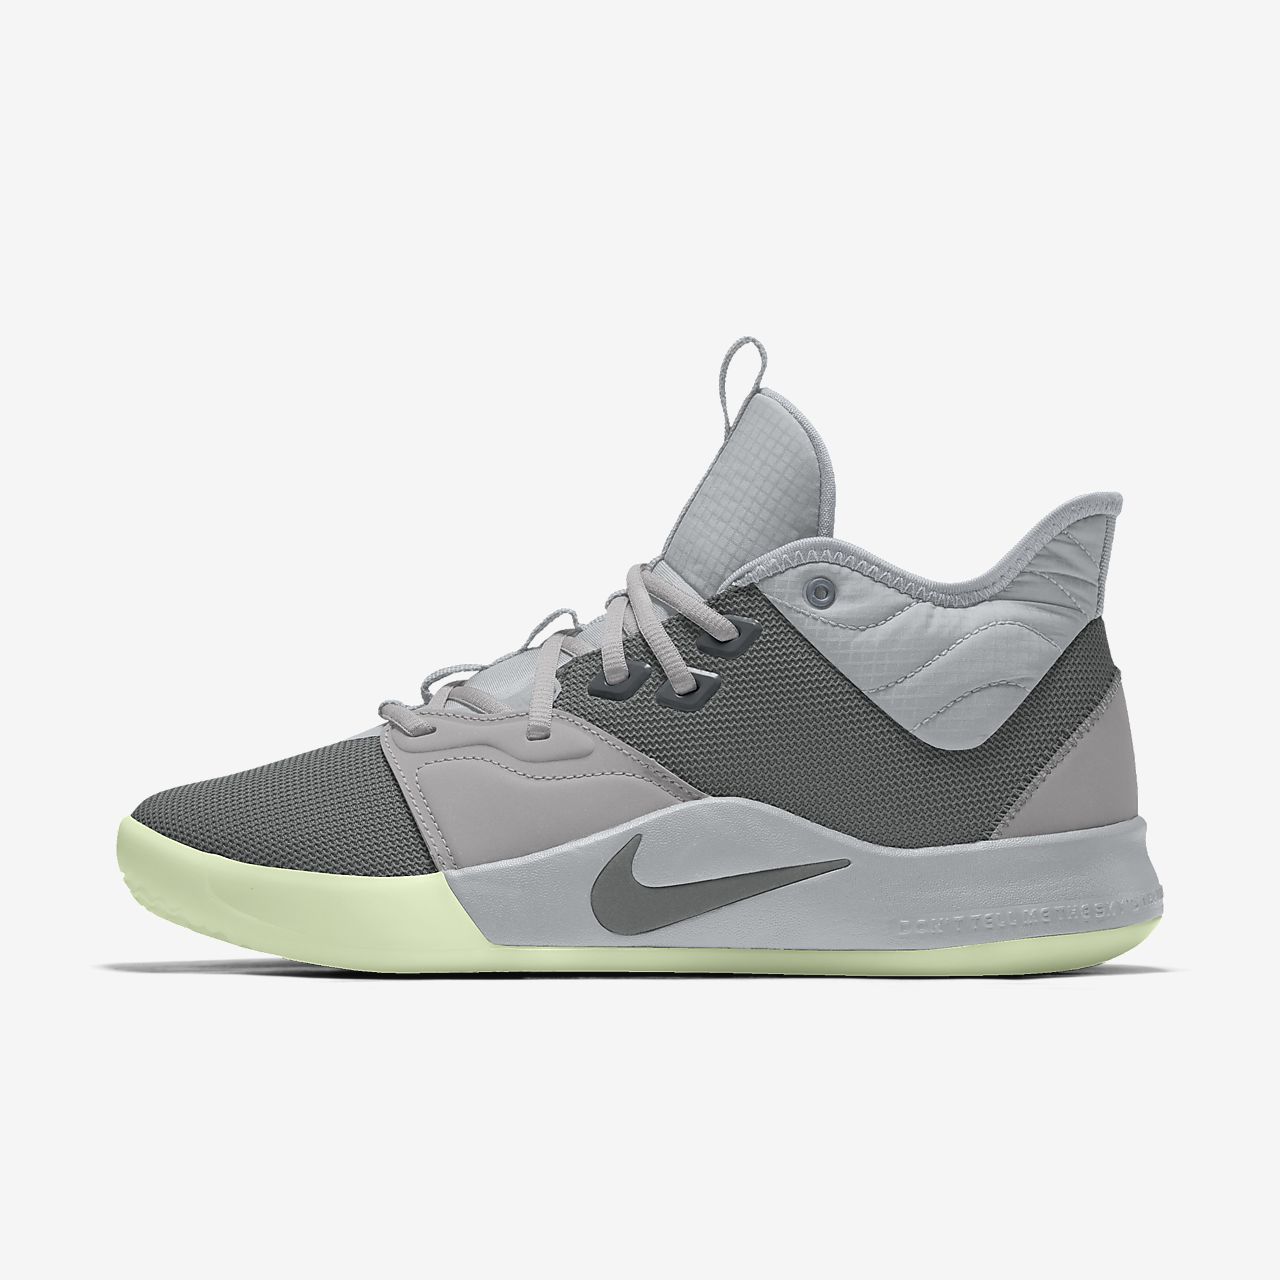 PG 3 By You Custom Basketball Shoe. Nike SI